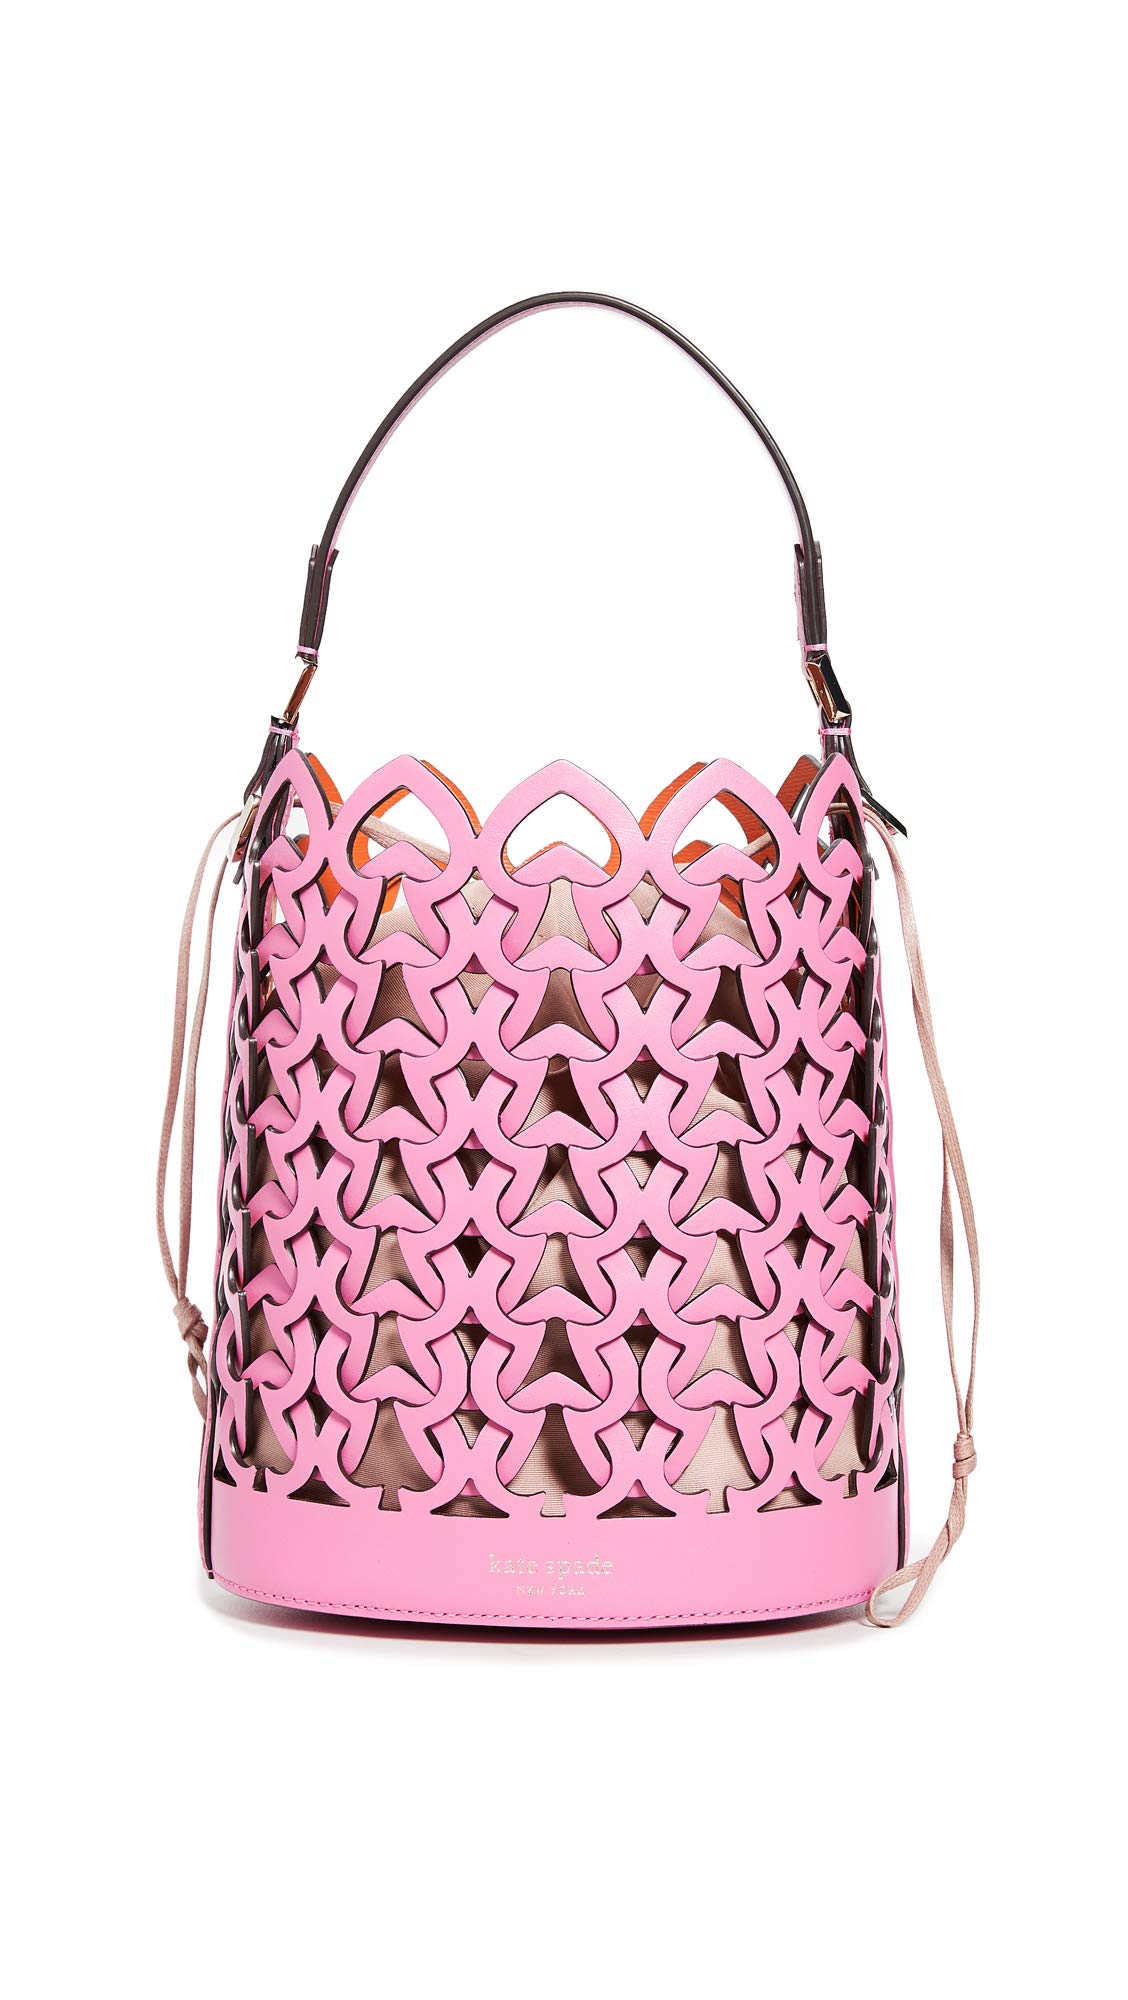 Kate Spade New York Women's Dorie Small Bucket Bag, Hibiscus Tea, Pink, One Size